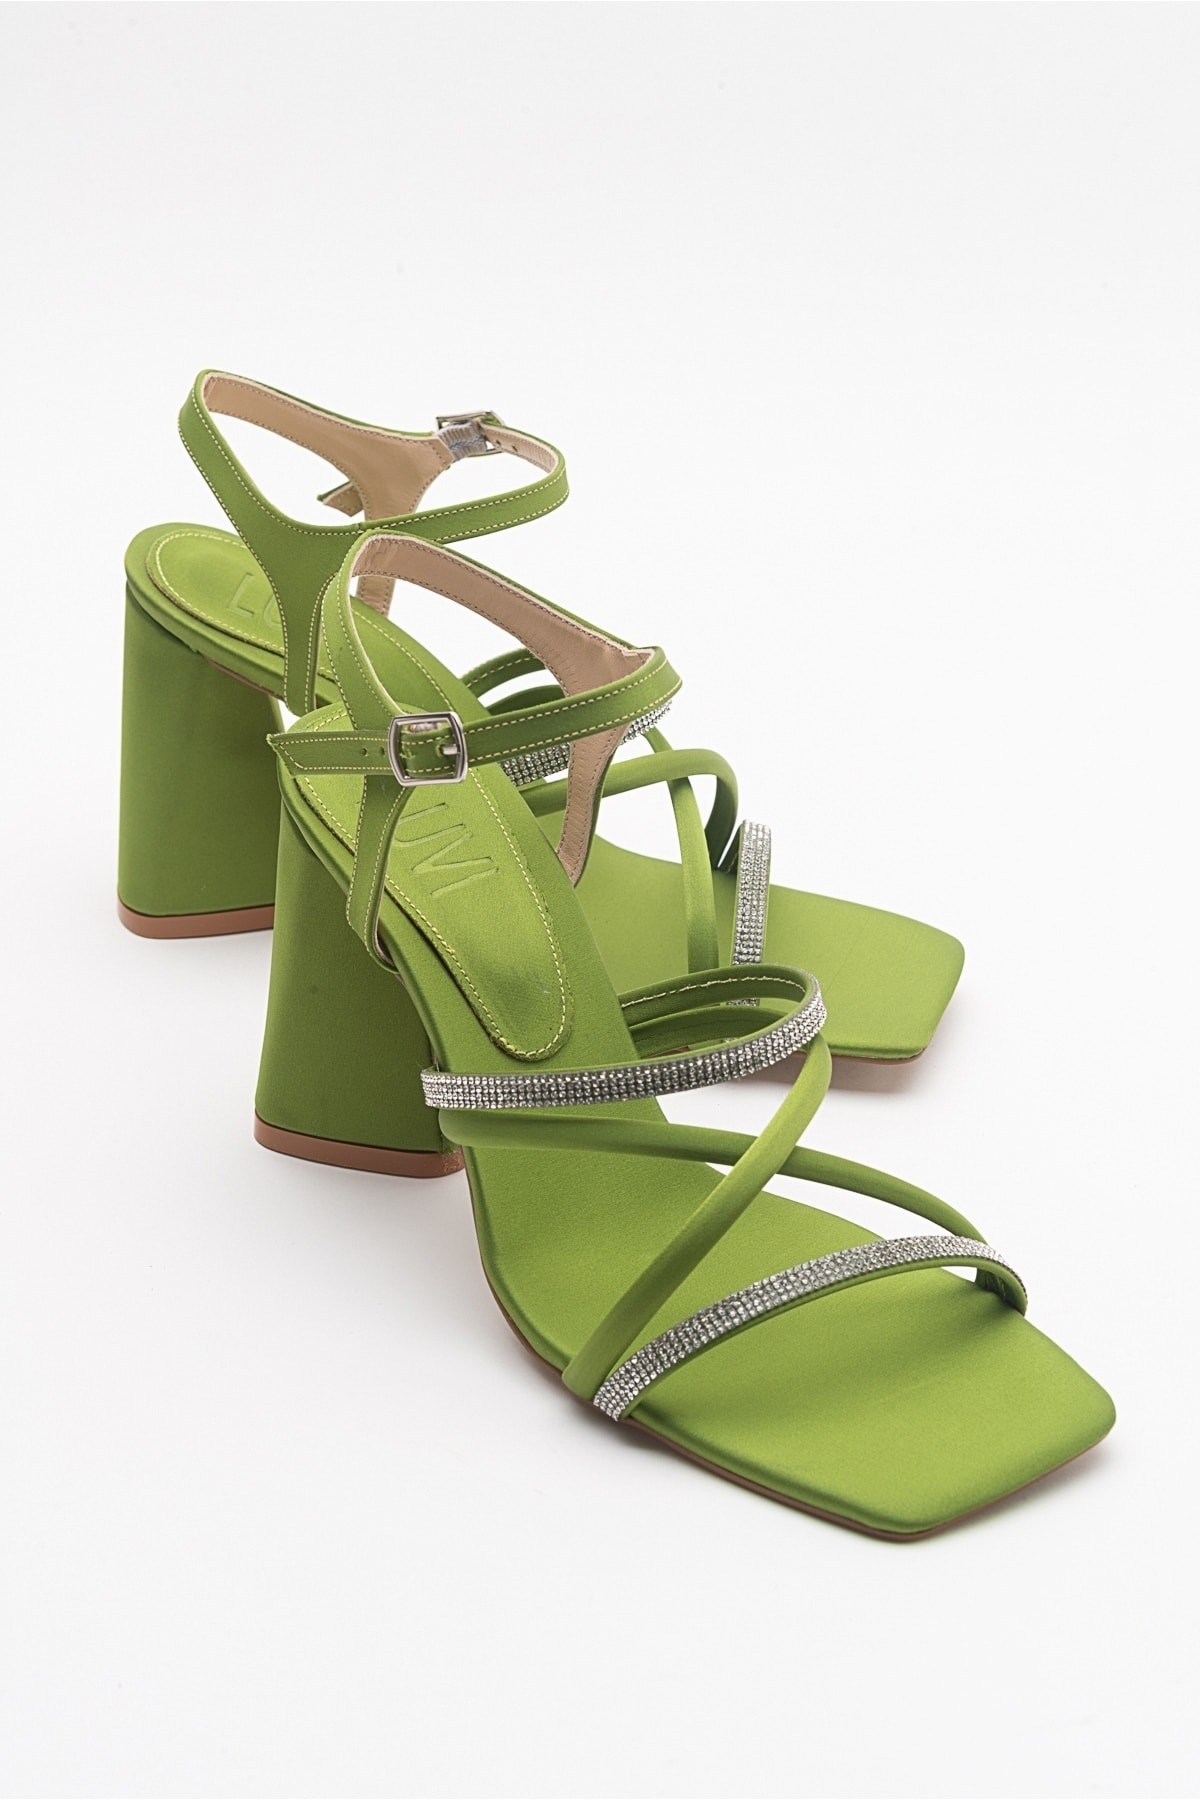 LuviShoes Vivid Women's Green Satin Heeled Shoes